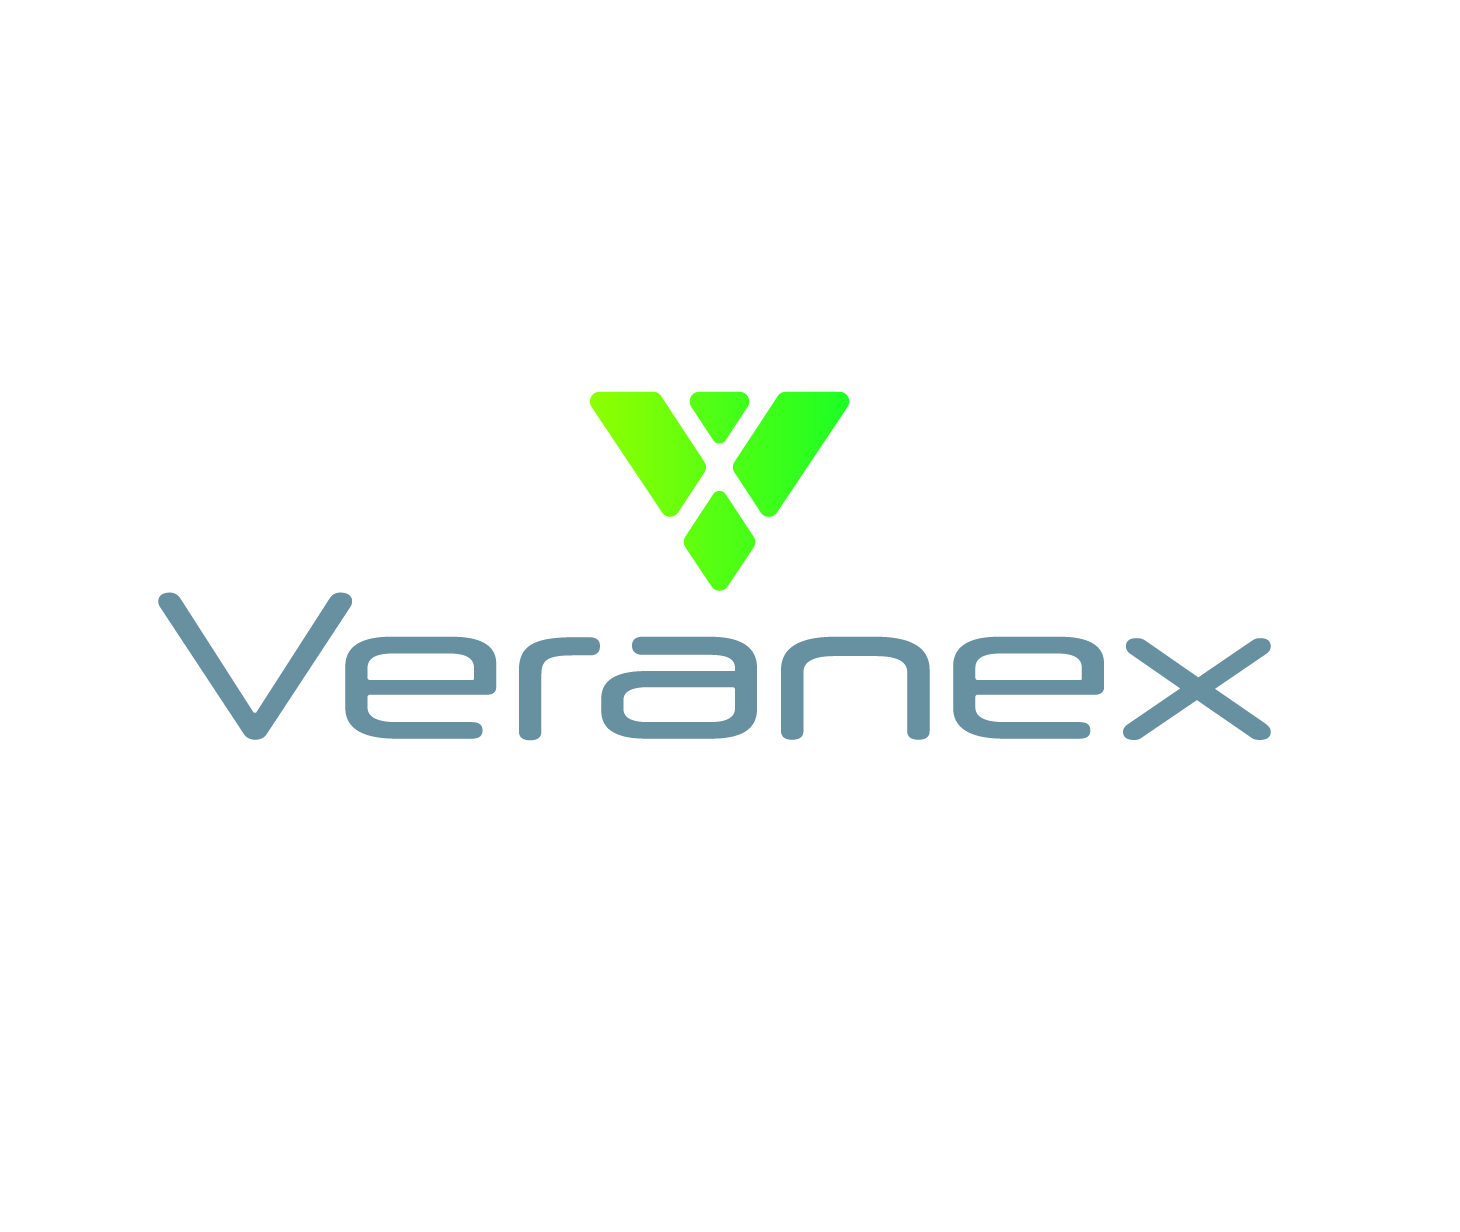 Visit www.veranexsolutions.com